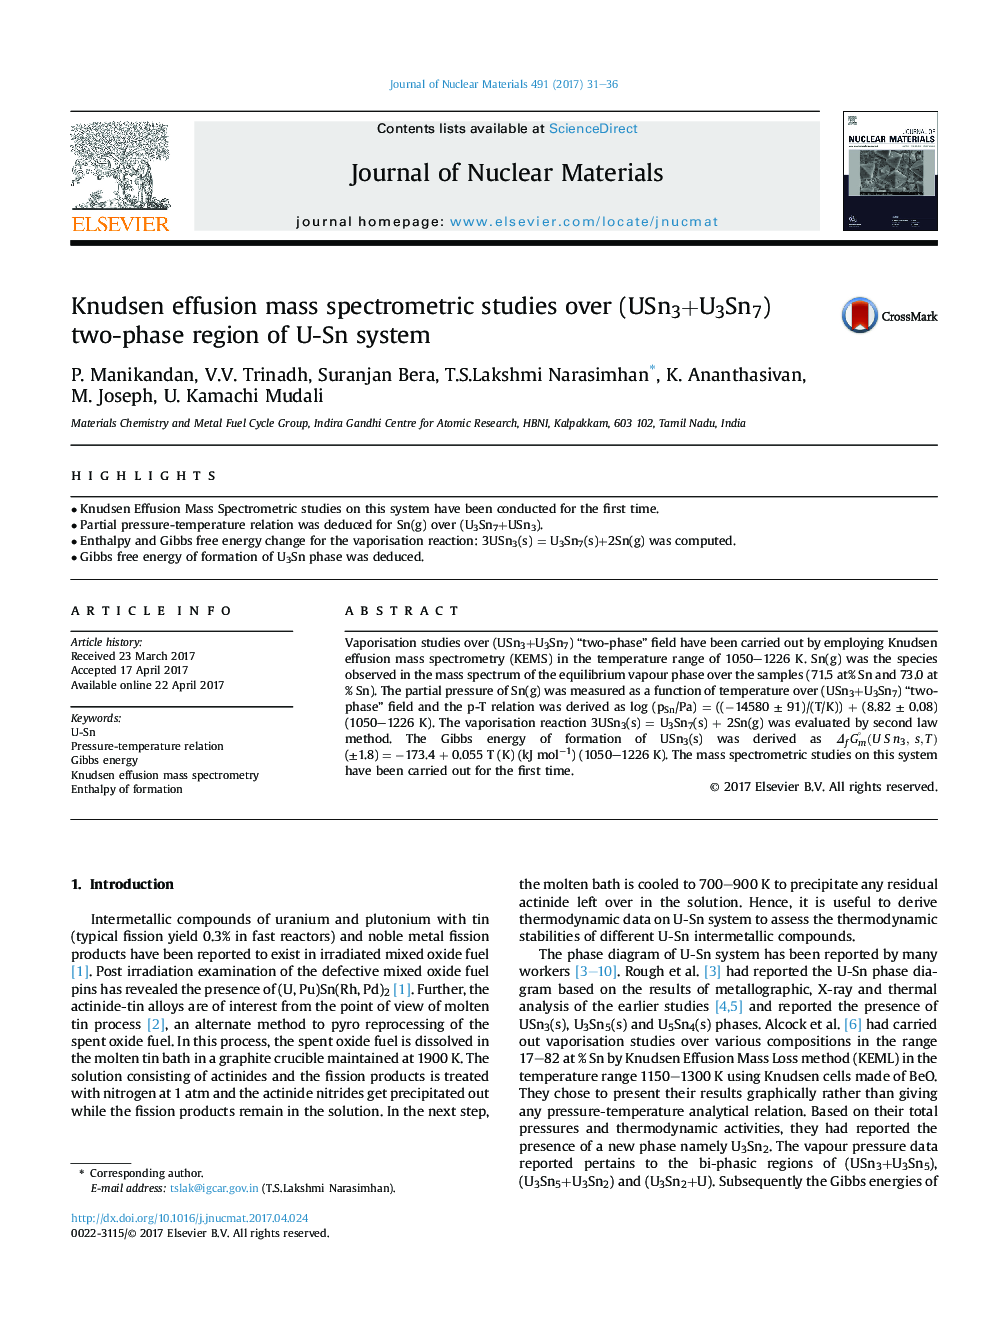 Knudsen effusion mass spectrometric studies over (USn3+U3Sn7) two-phase region of U-Sn system